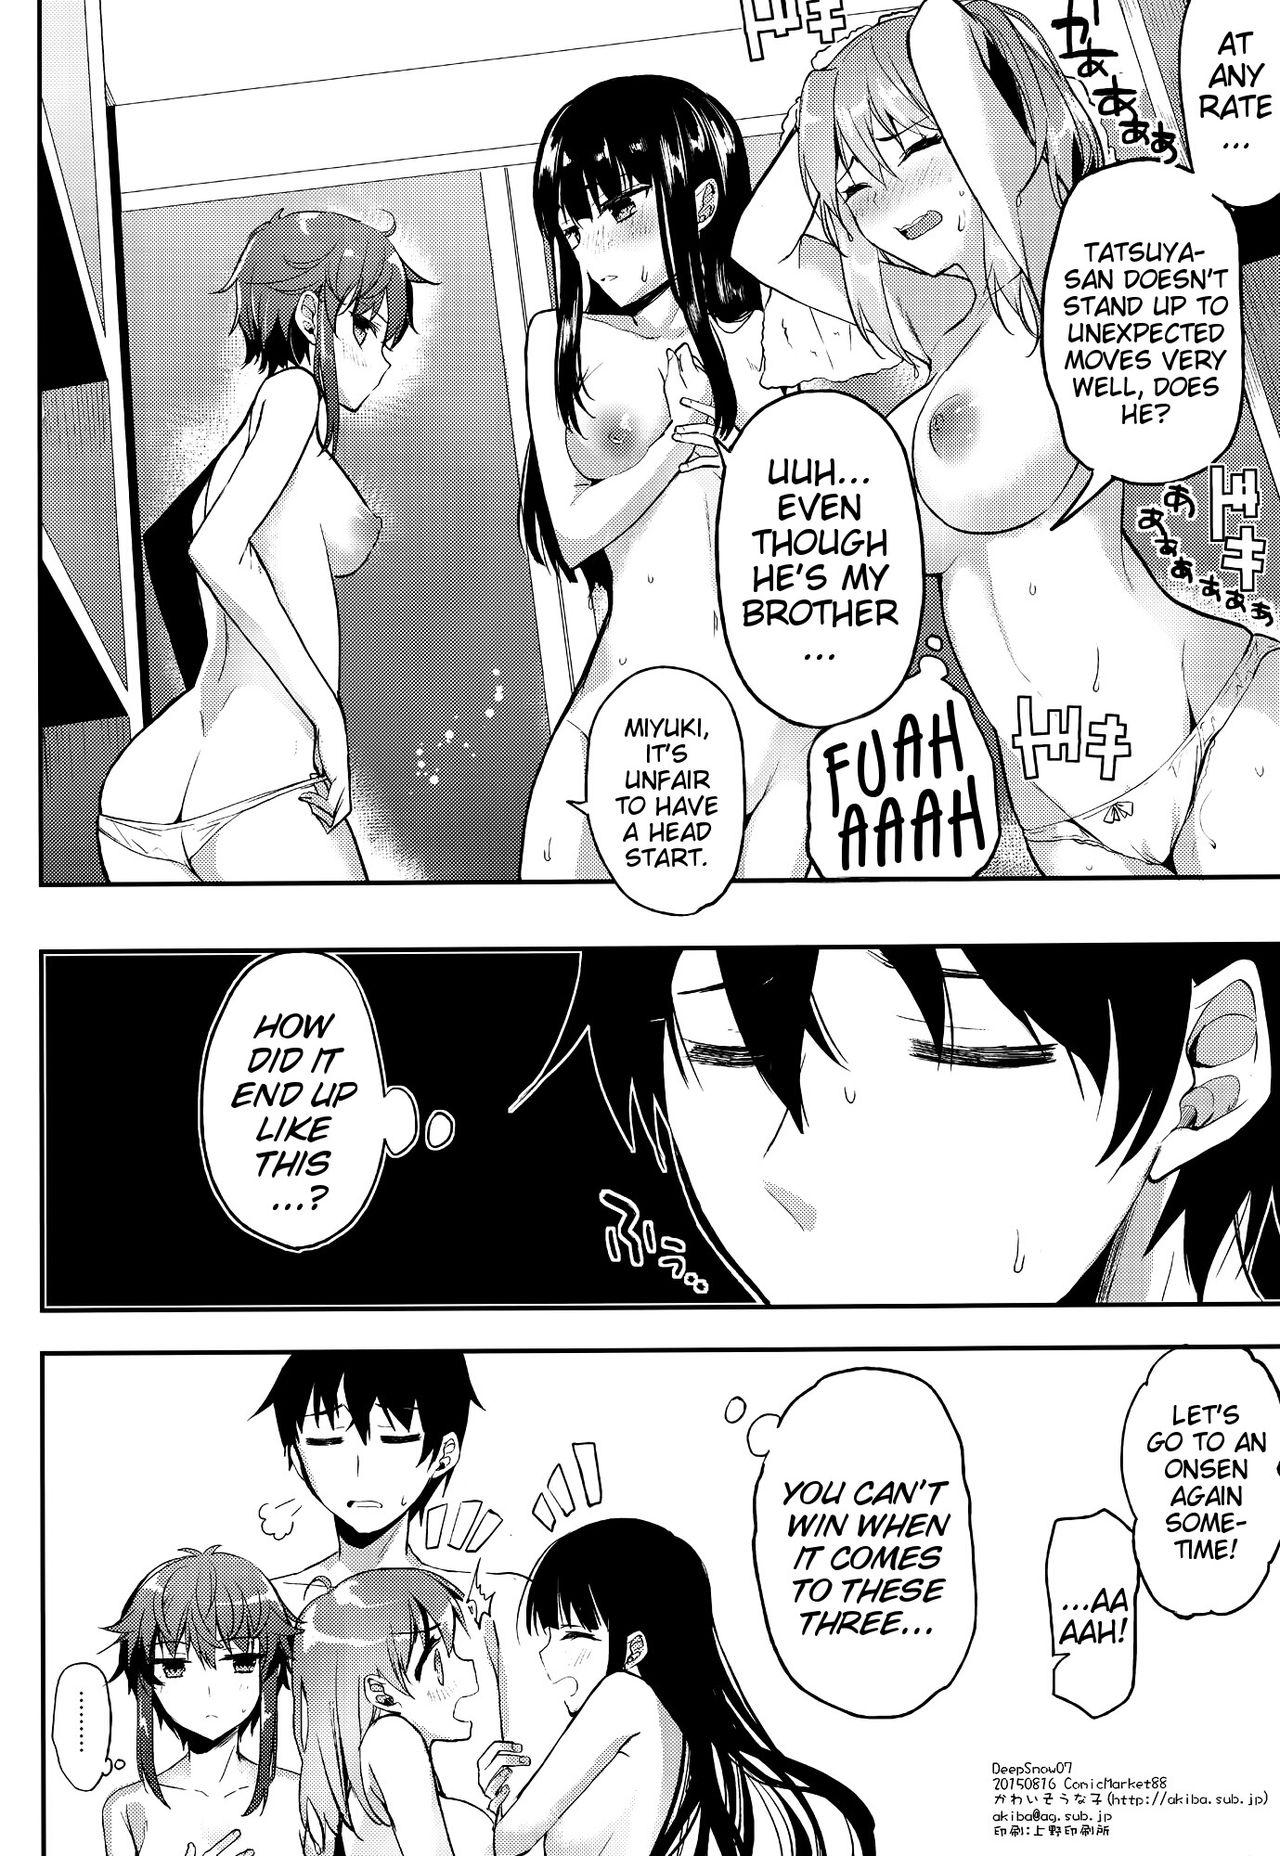 Erotic Deep Snow 7 - Mahouka koukou no rettousei Sesso - Page 27